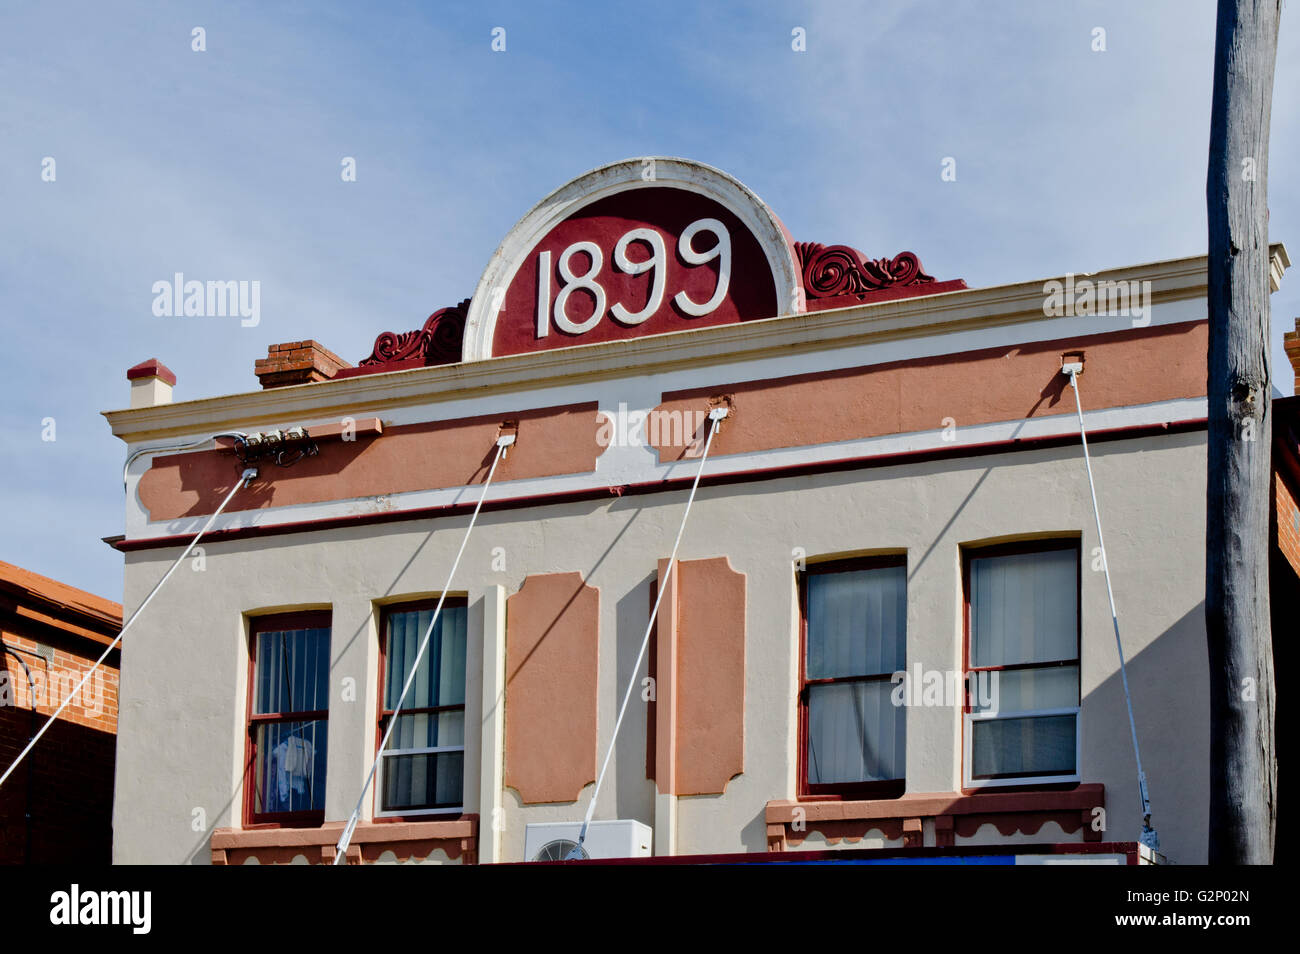 Fachada de edificio con fecha de 1899. Australia. Foto de stock